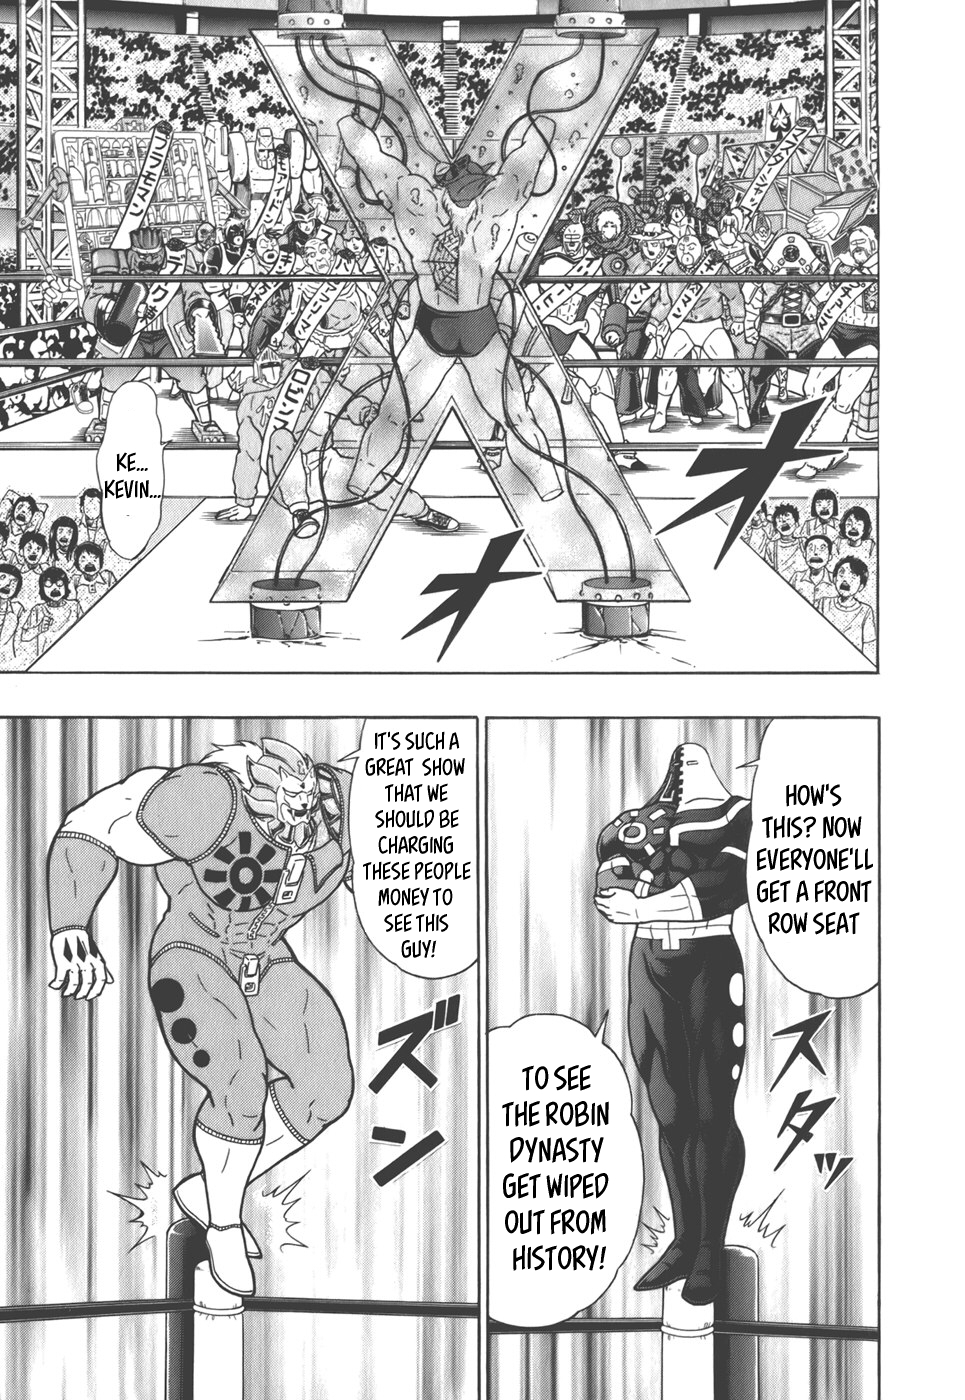 Kinnikuman II Sei: Kyuukyoku Choujin Tag Hen Vol.4 Ch.34-39